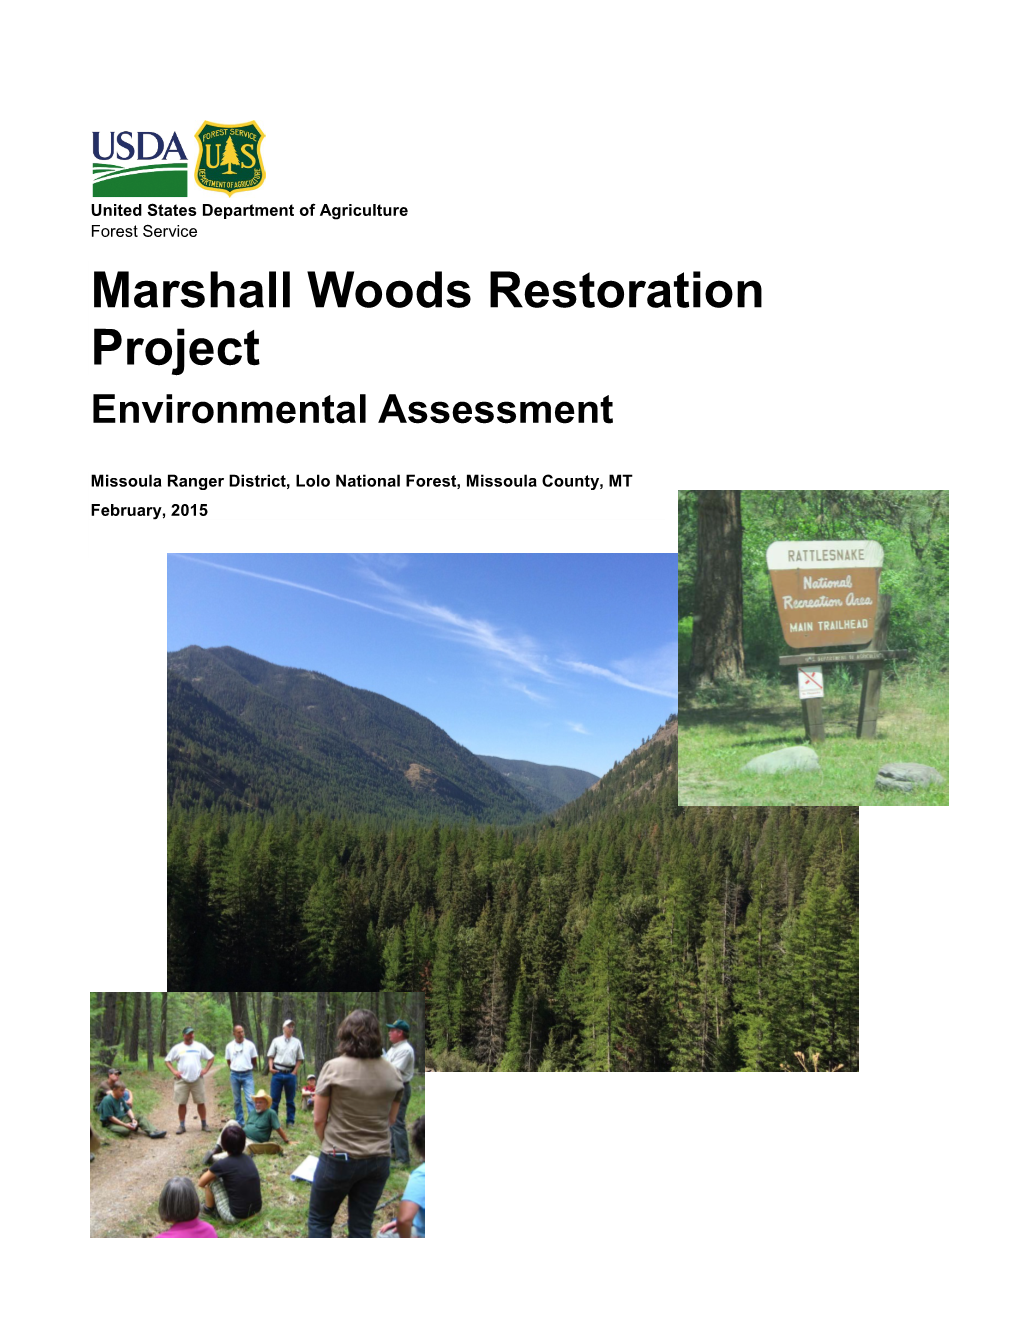 Marshall Woods Restoration Project Environmental Assessment